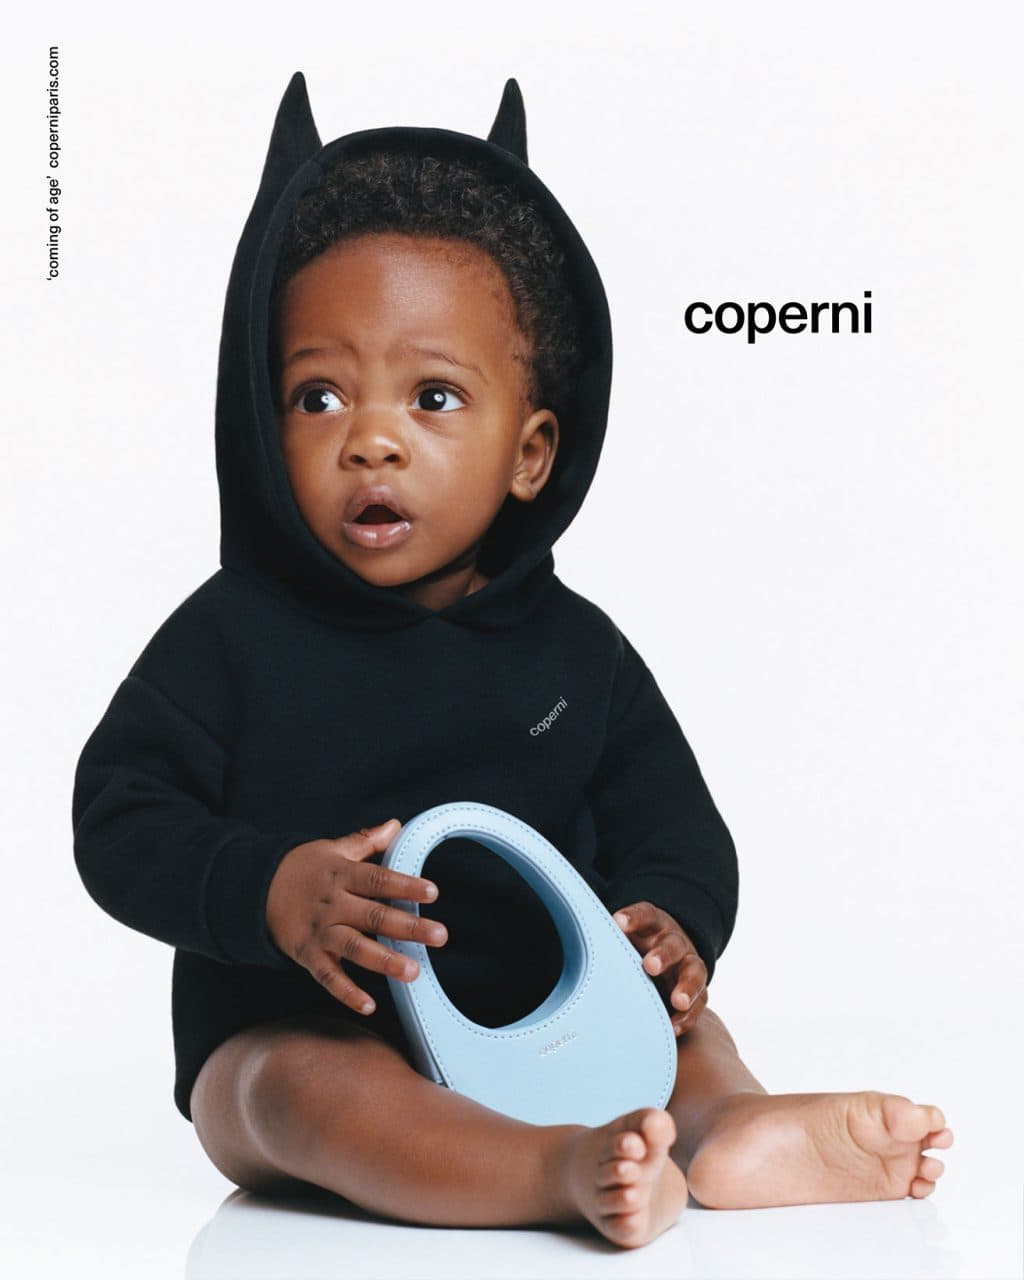 Coperni, Baby!